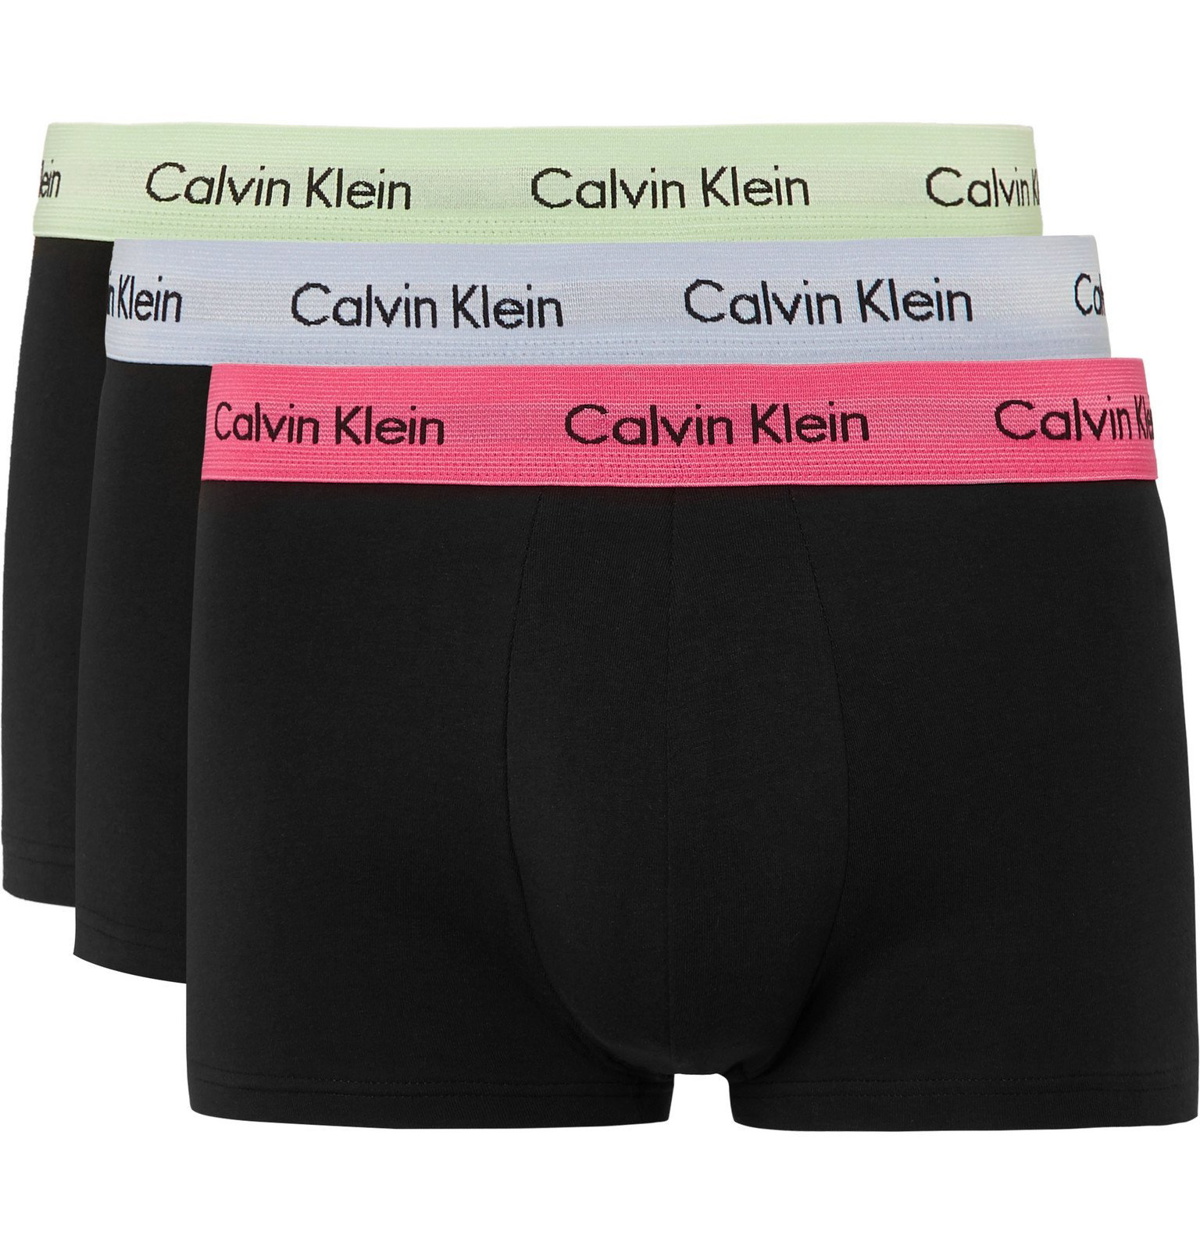 Calvin Klein Multi-logo print cotton-blend hoody